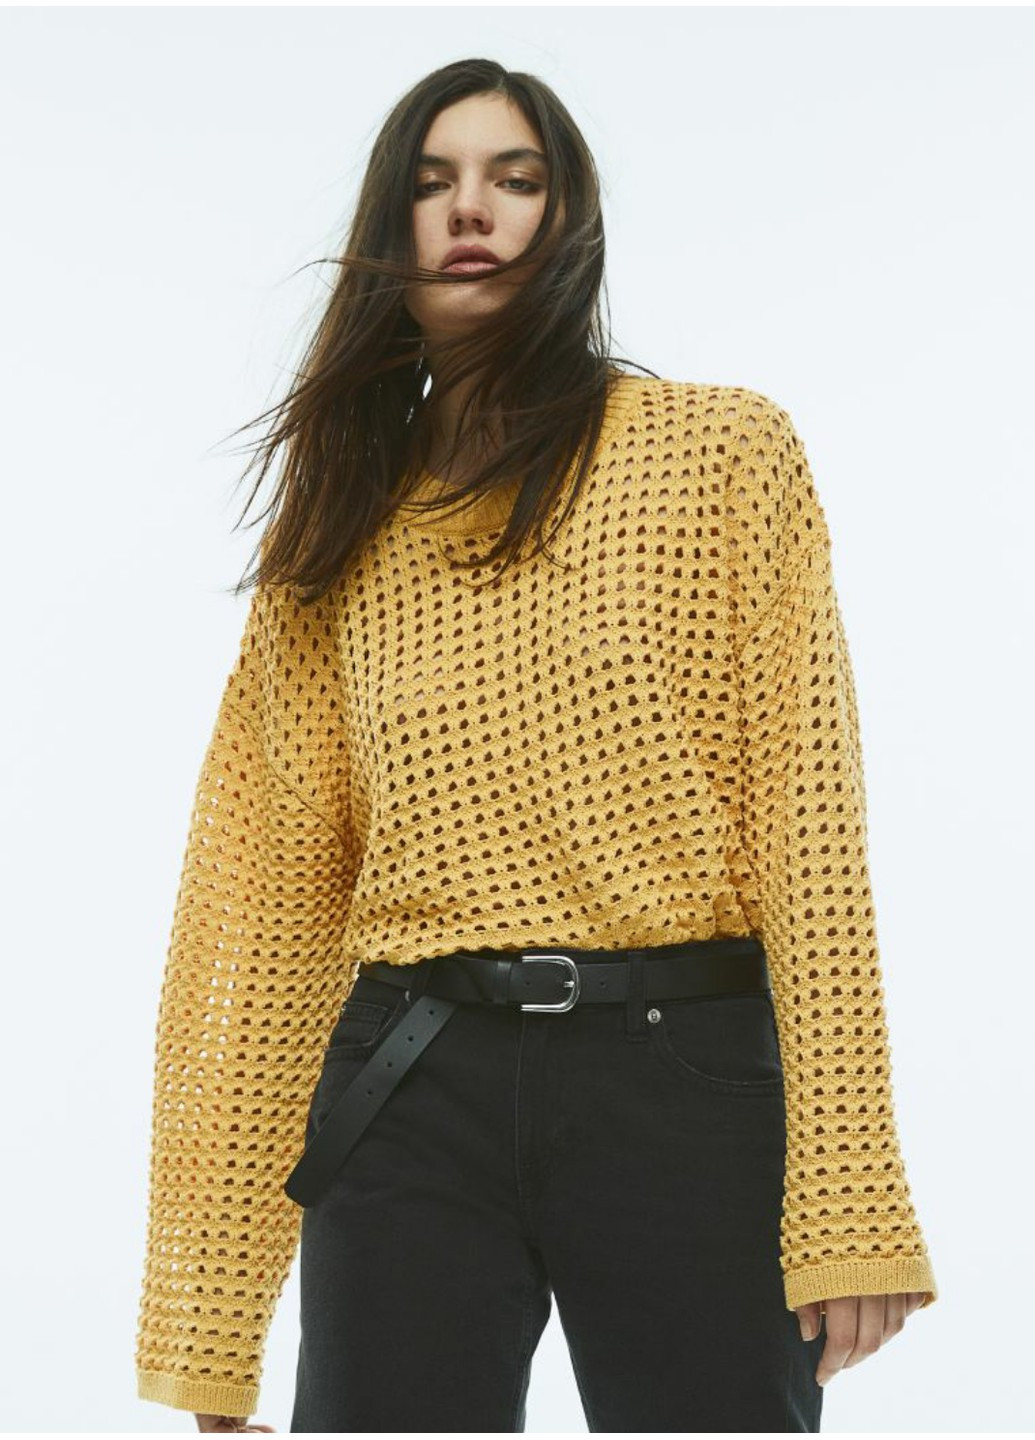 Жовтий демісезонний жіночий ажурний светр н&м (56133) s жовтий H&M